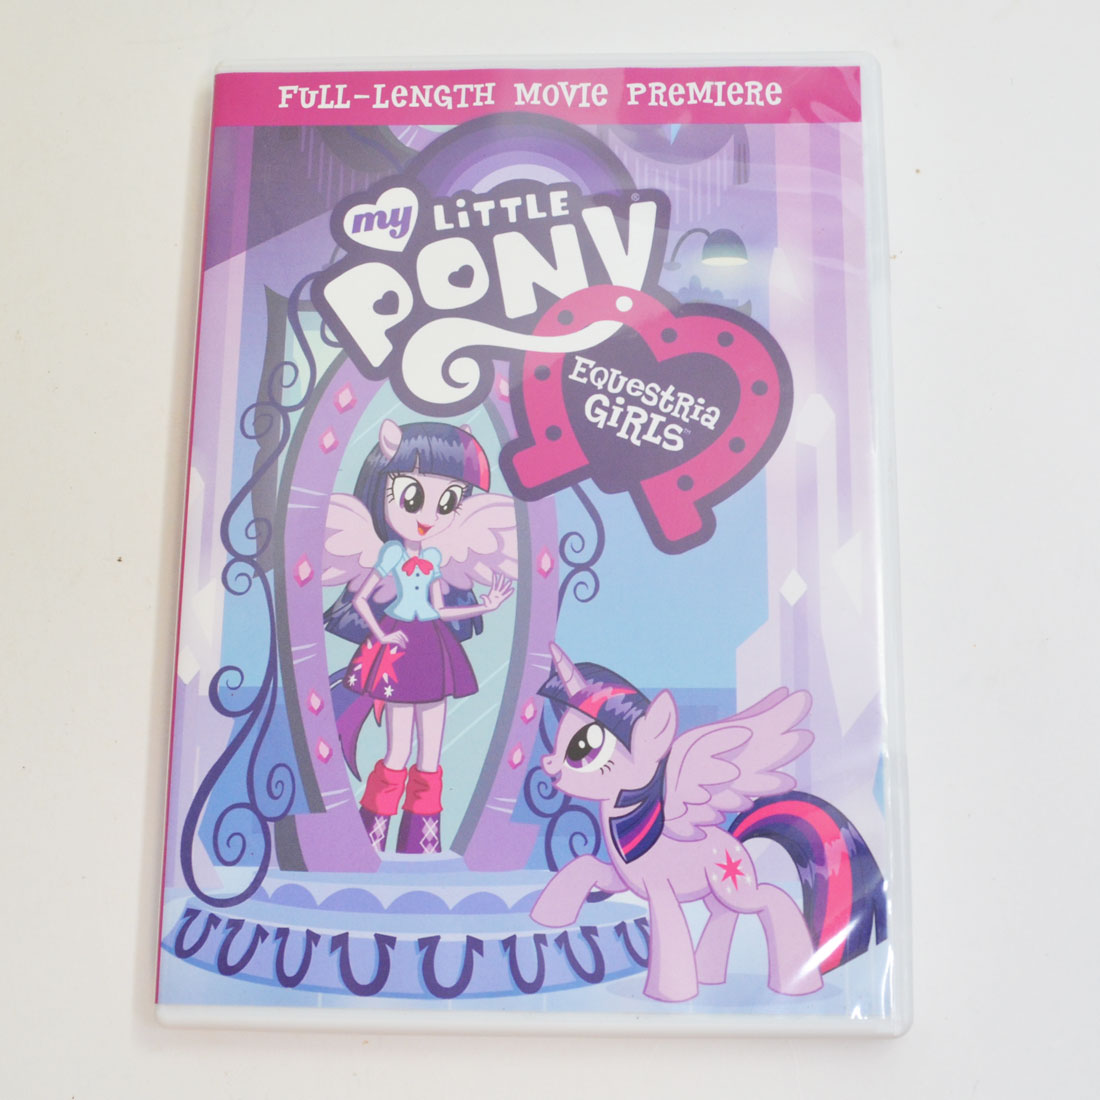 My Little Pony Equestria Girls (DVD, 2013) Hasbro Studios